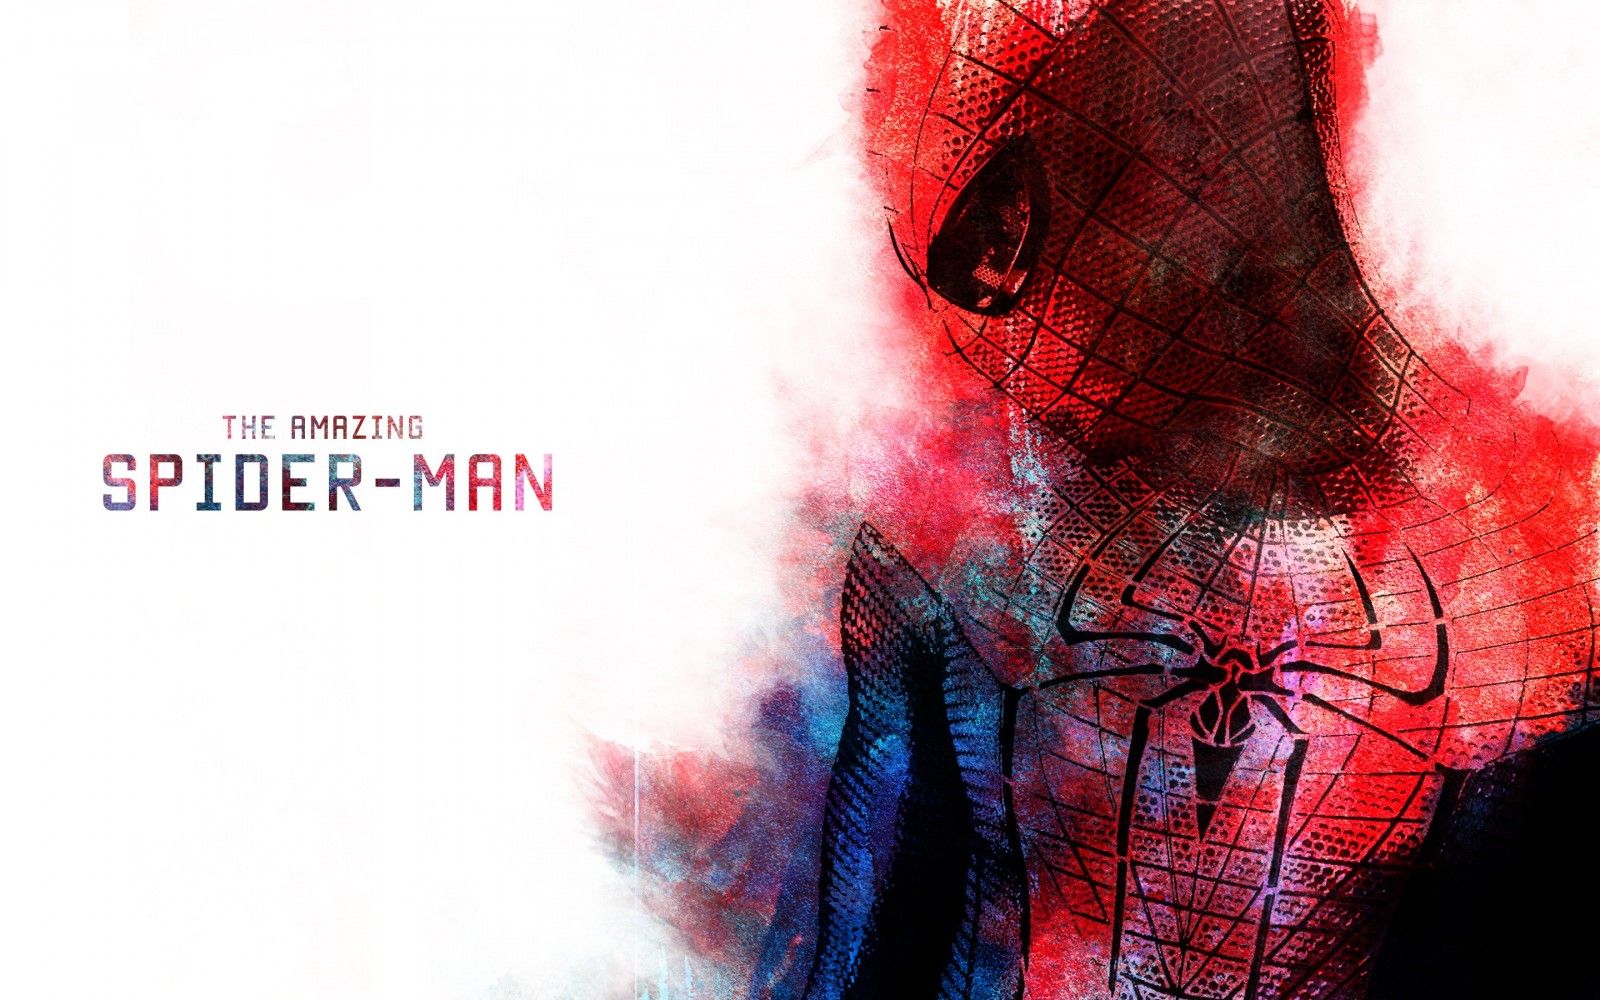 Wallpaper, 2880x1800 px, action, man, marvel, poster, spider, spiderman, superhero 2880x1800